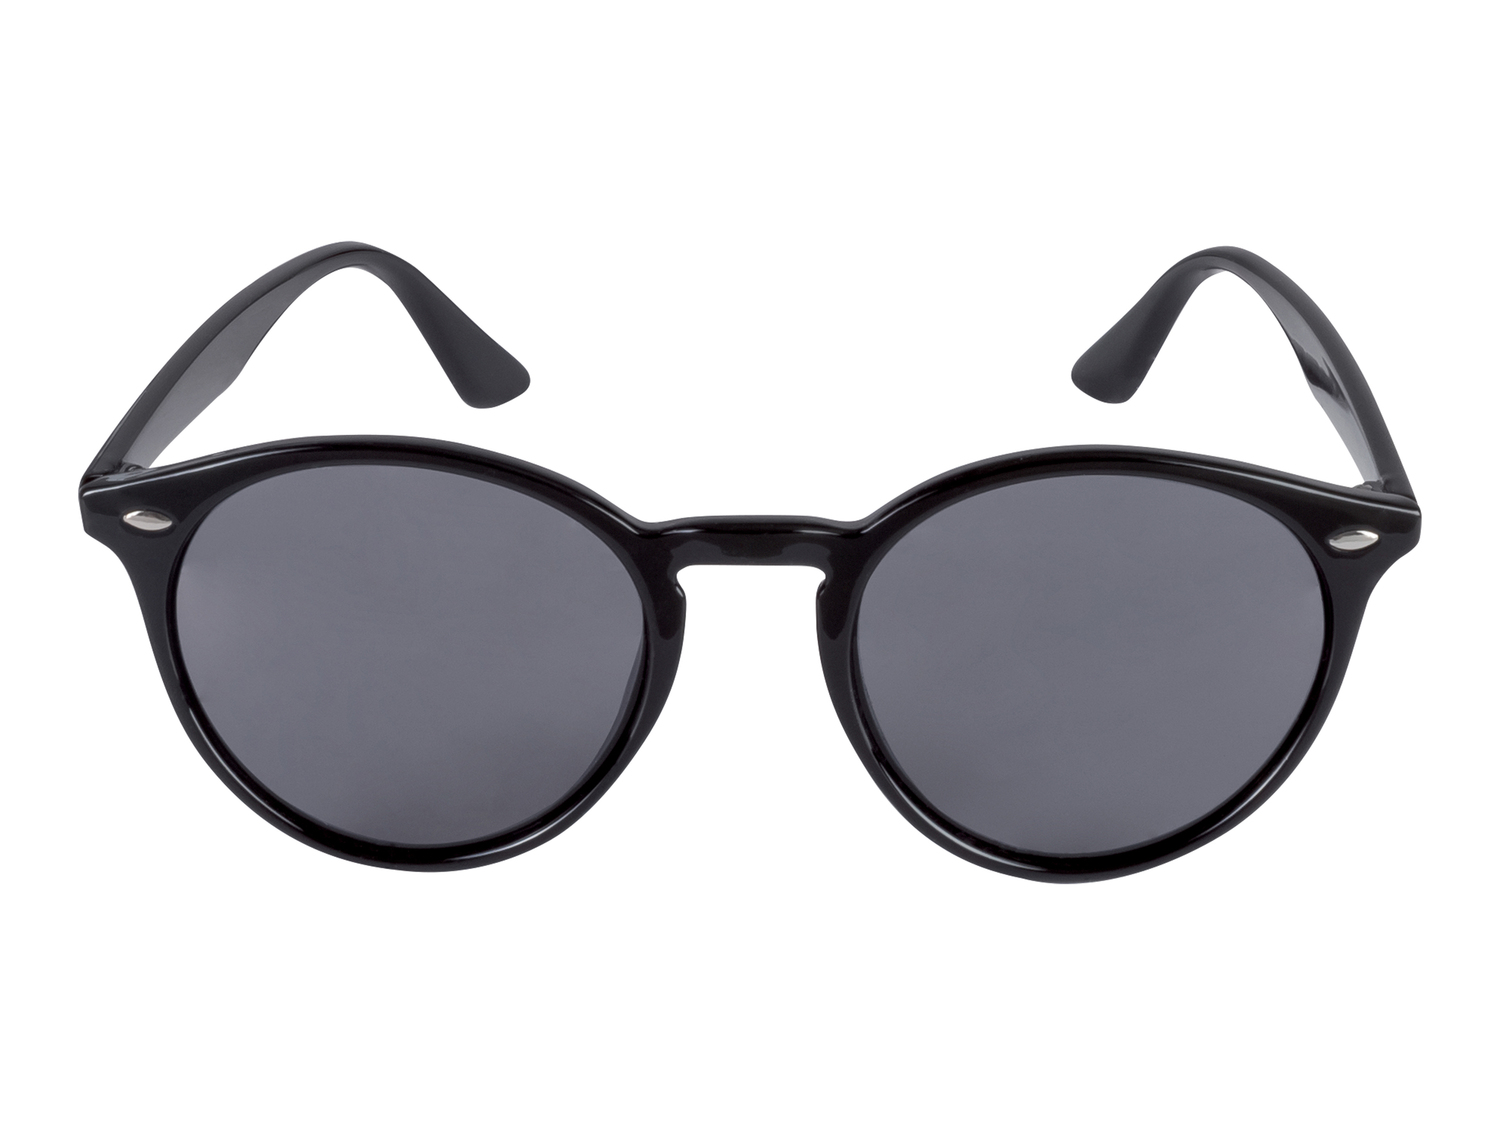 Occhiali da sole per donna Auriol Eyewear, prezzo 3.99 &#8364; 

Caratteristiche

- ...